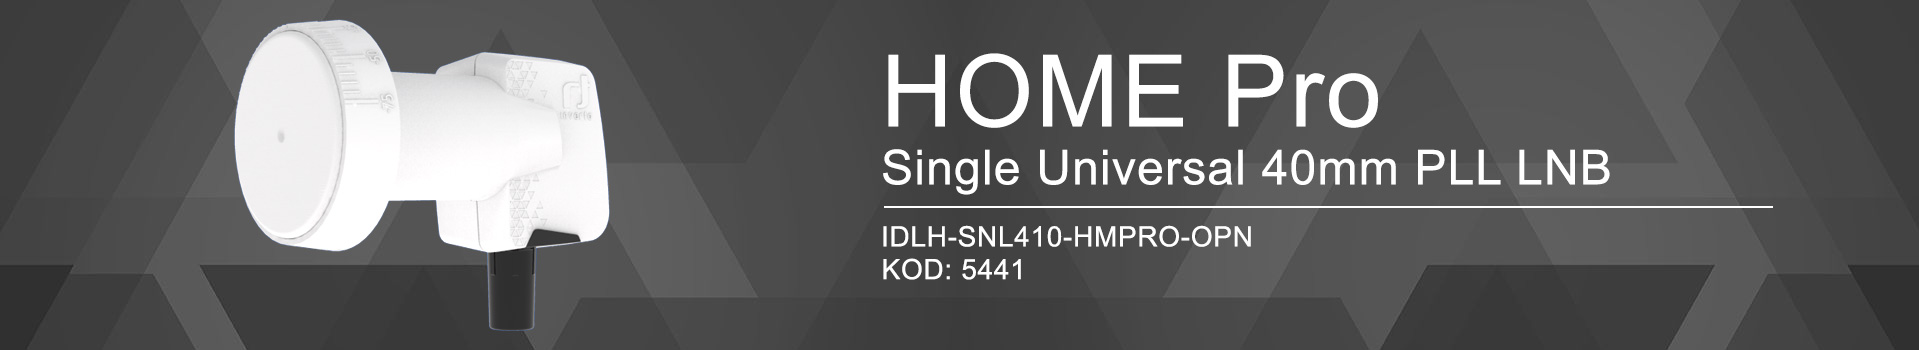 konwerter satelitarny Inverto Single Home Pro IDLH-SNL410-HMPRO-OPN